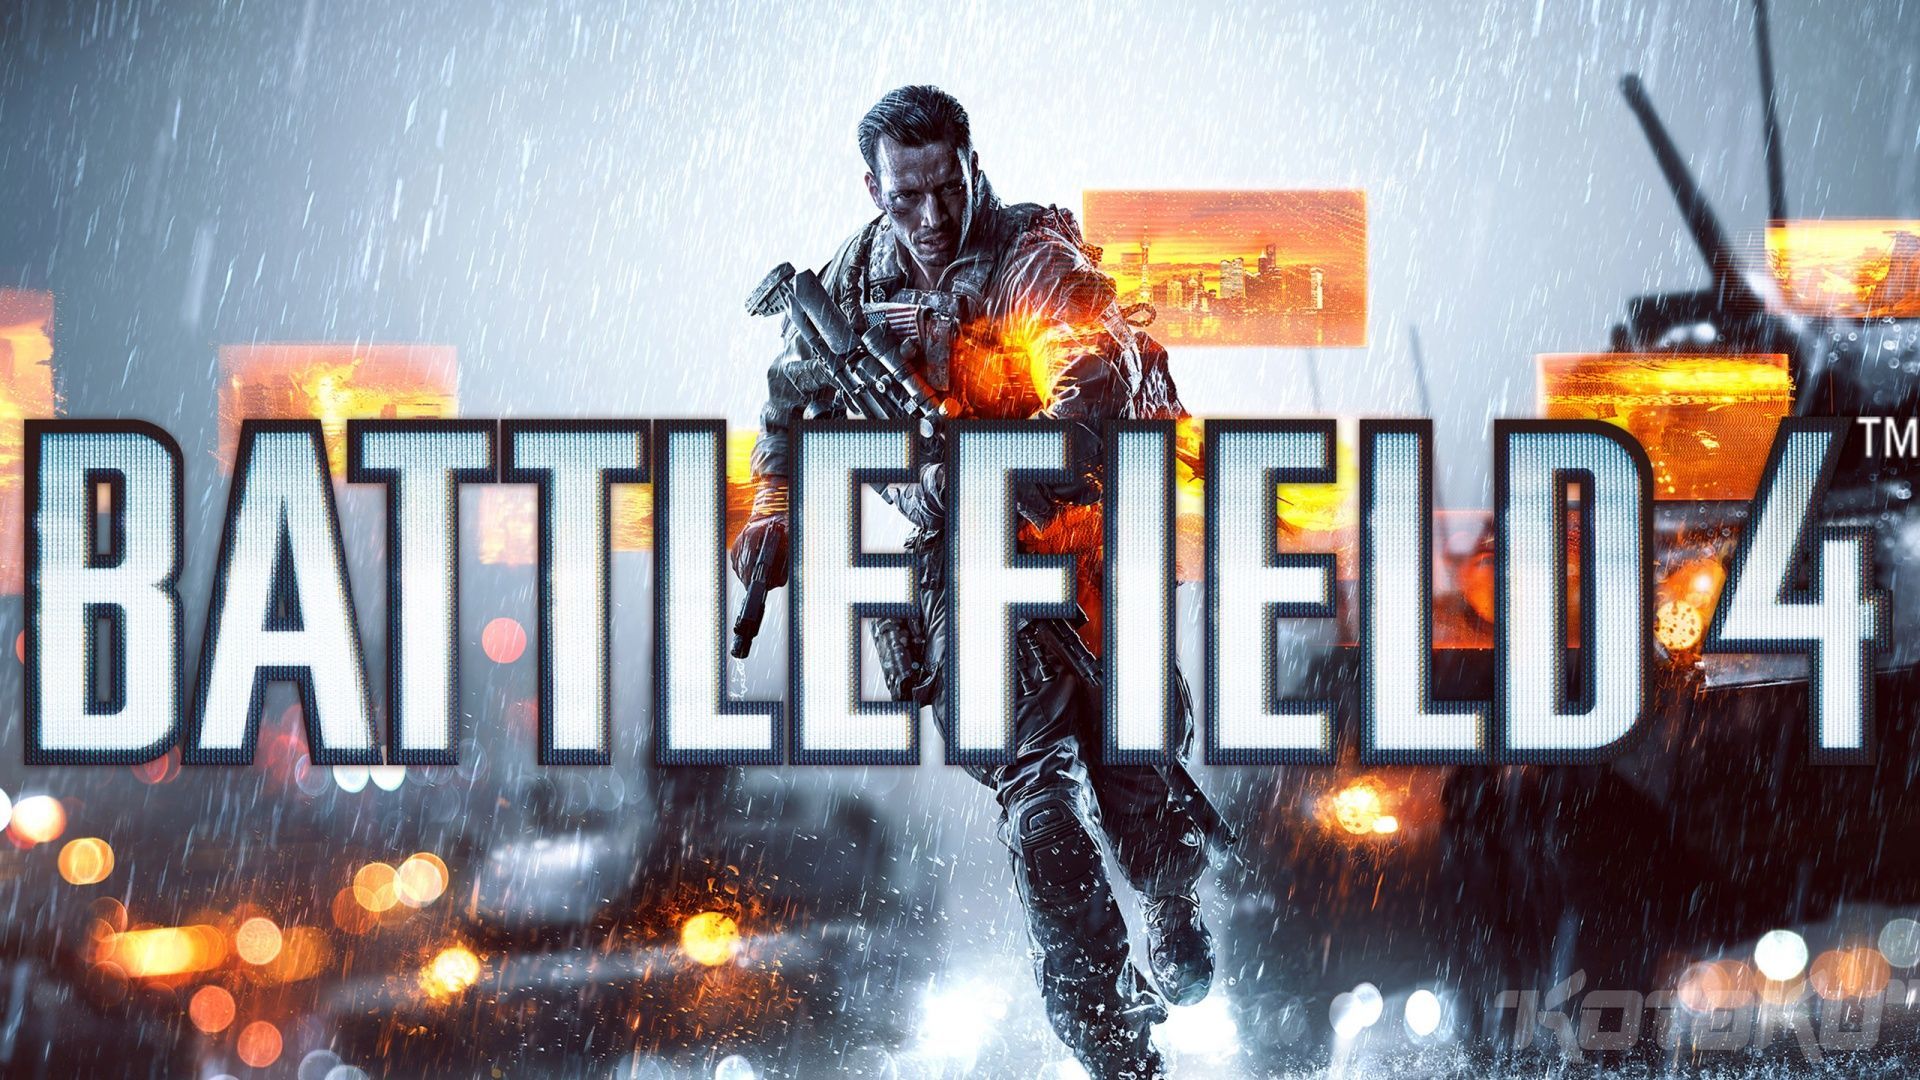 Battlefield 4 Wallpapers HD Backgrounds